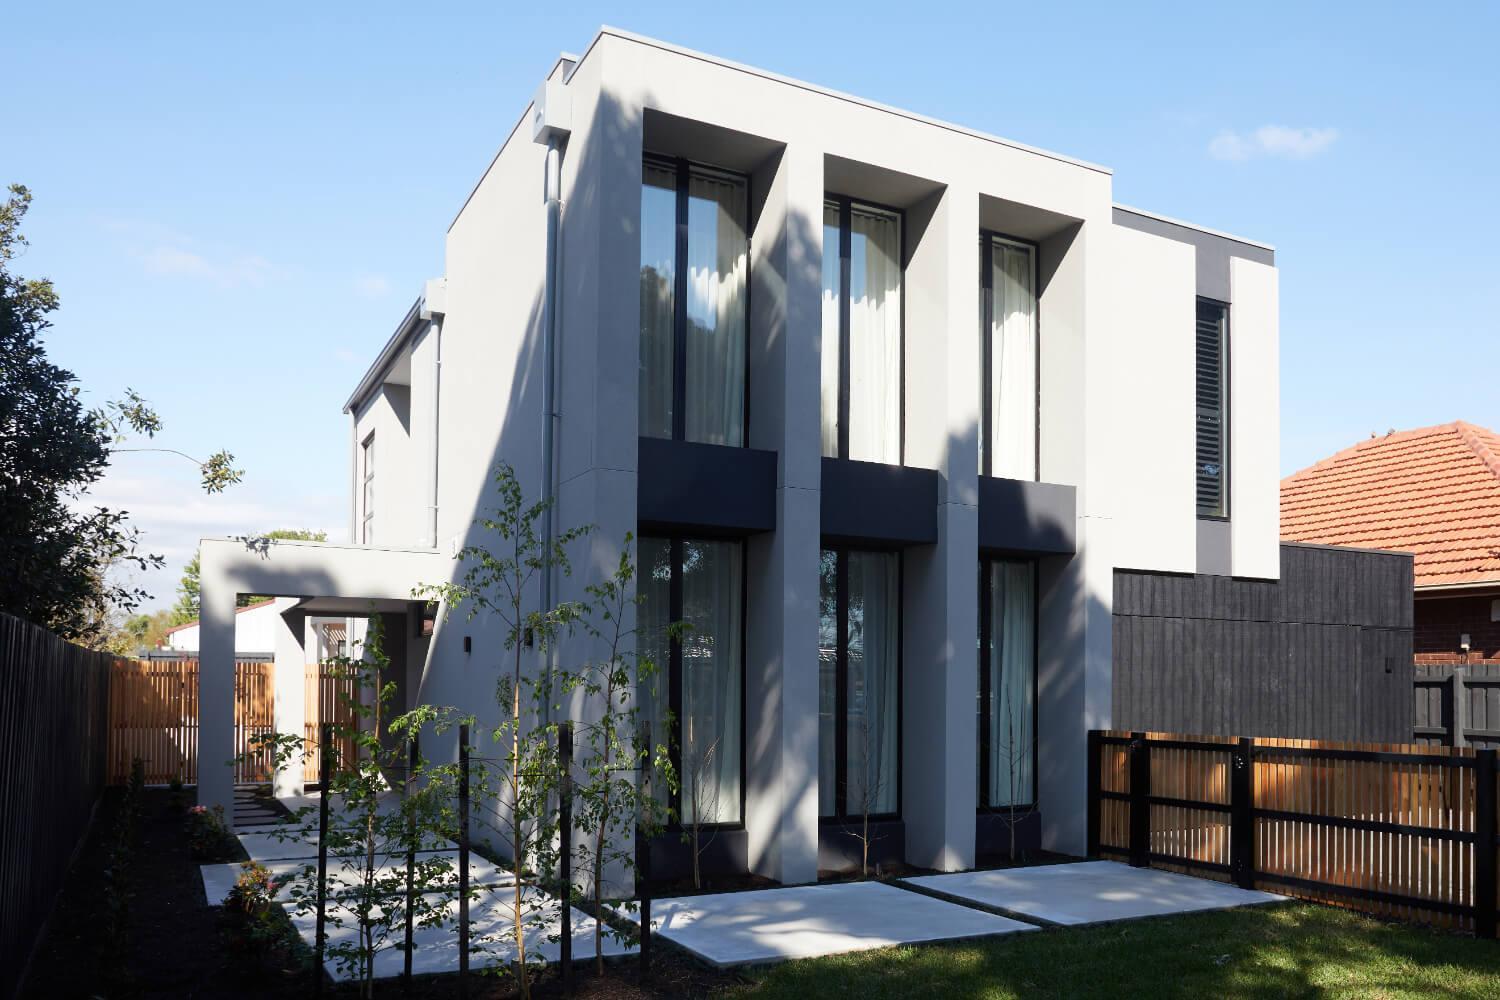 Hughesdale Home With Striking Contemporary Facade Utilising Large Windows